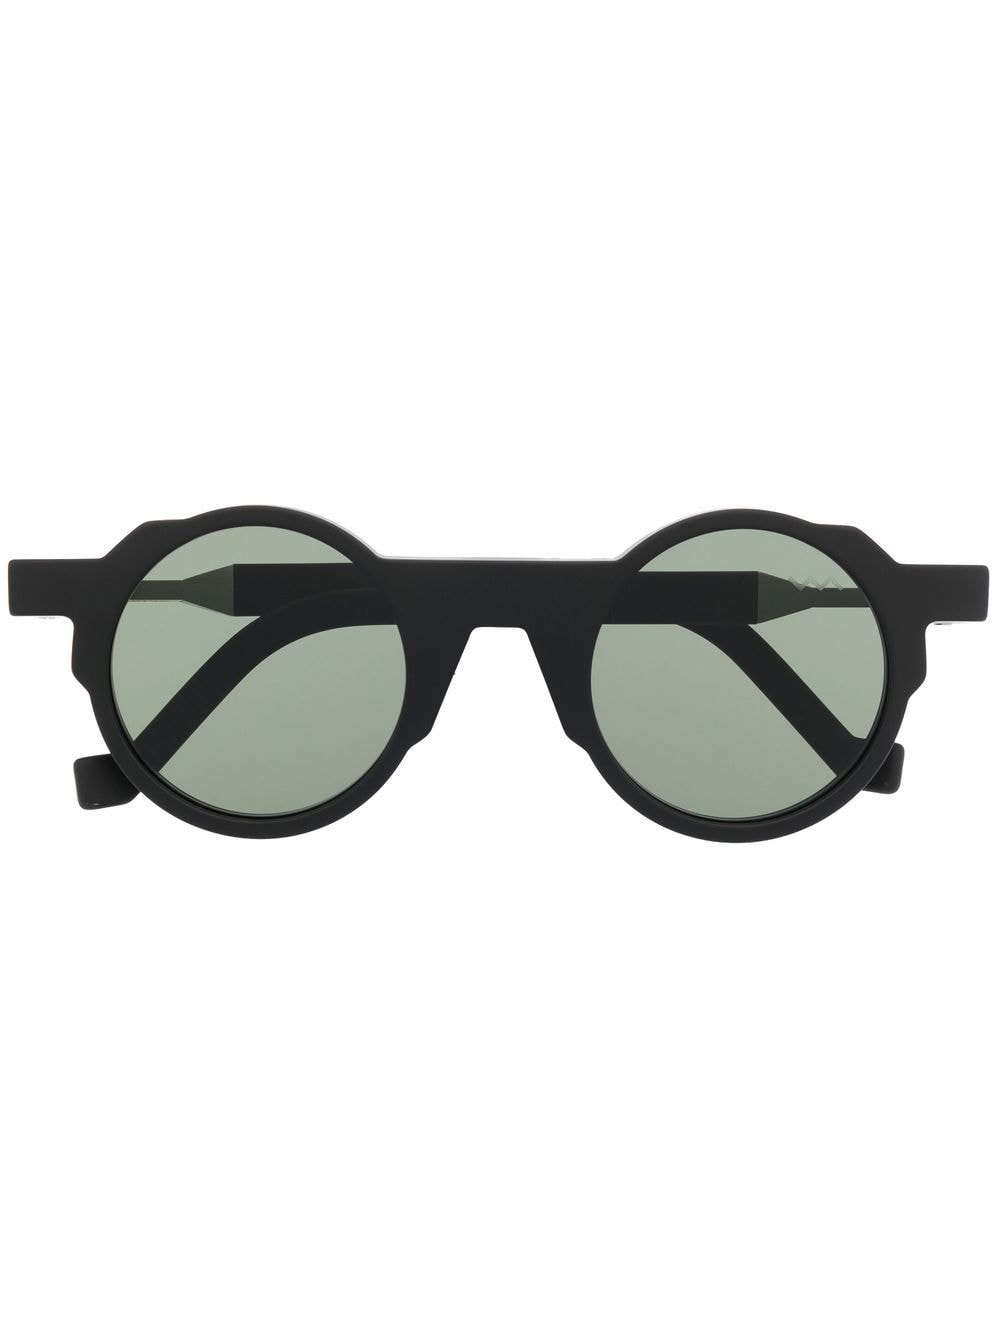 Image 1 of VAVA Eyewear Occhiali da sole tondi